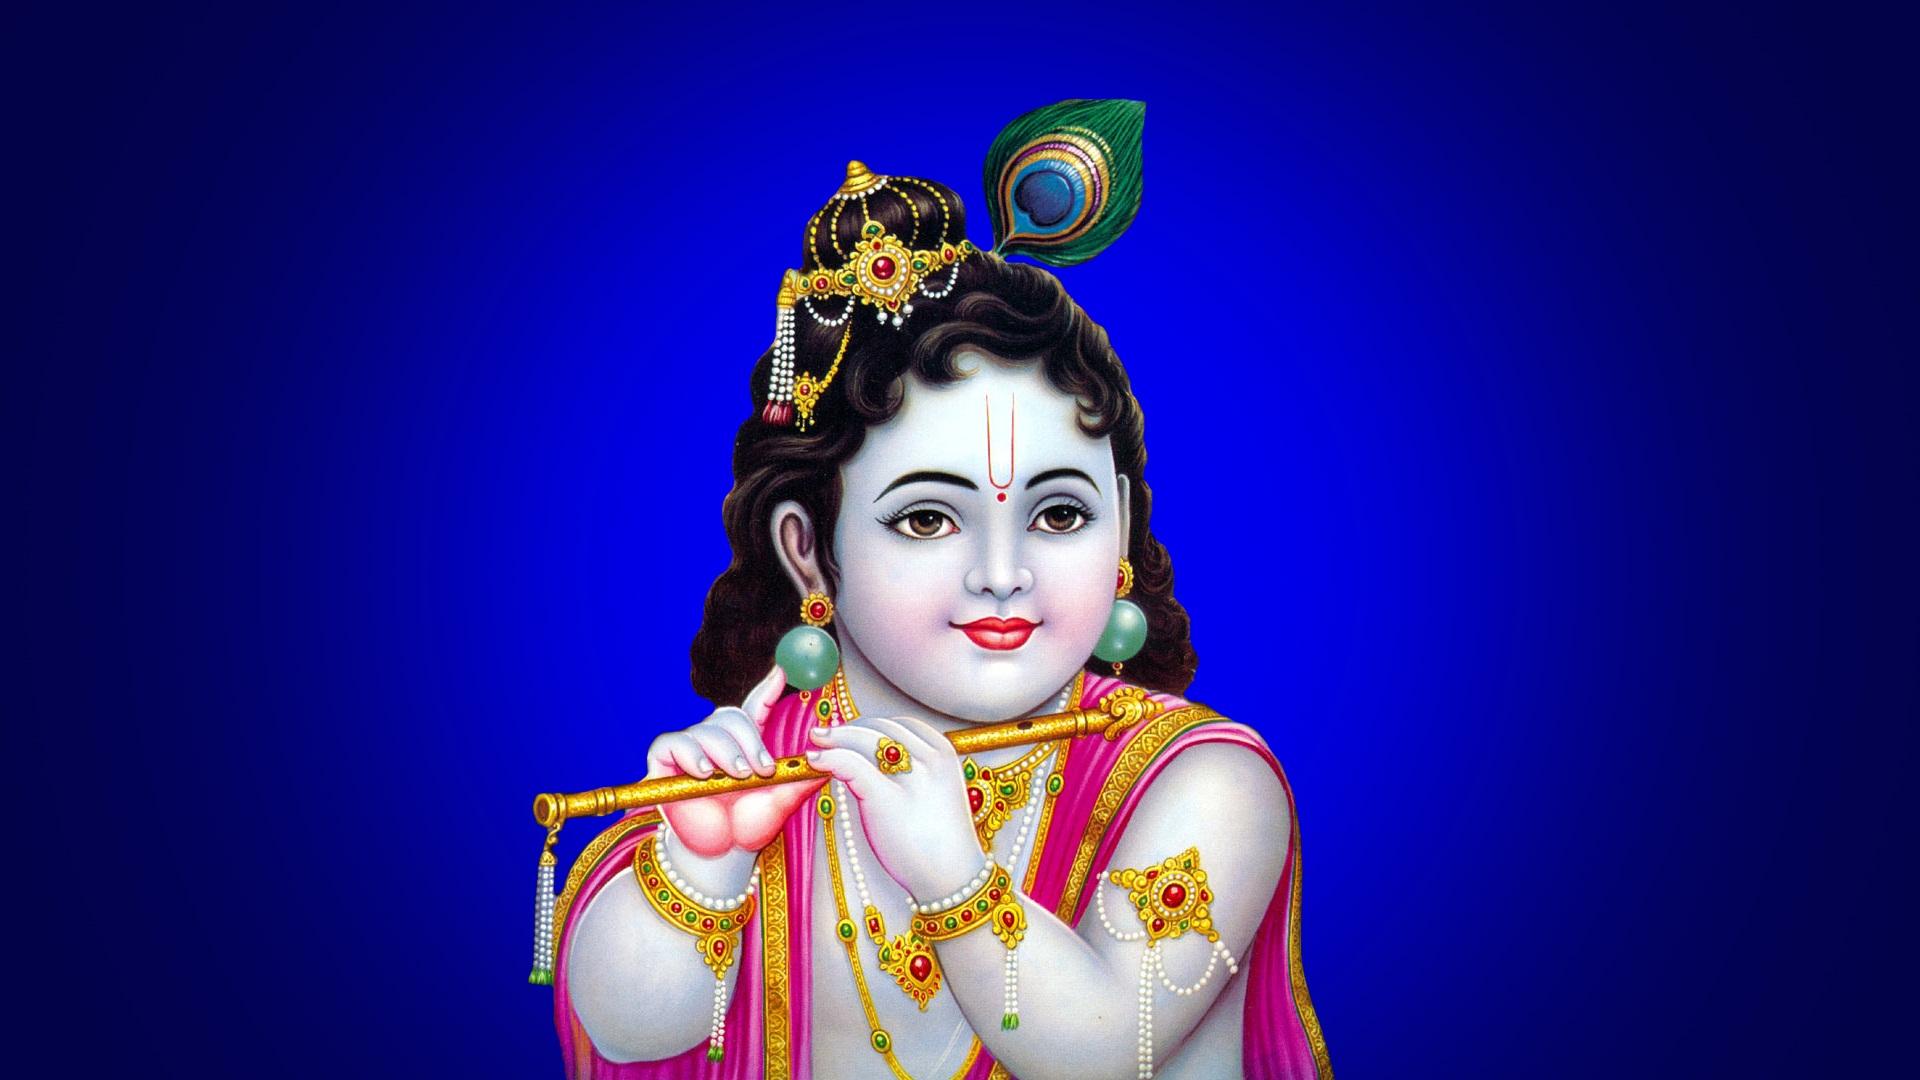 Krishna Live Wallpaper, photo Suit, games, arati, frame